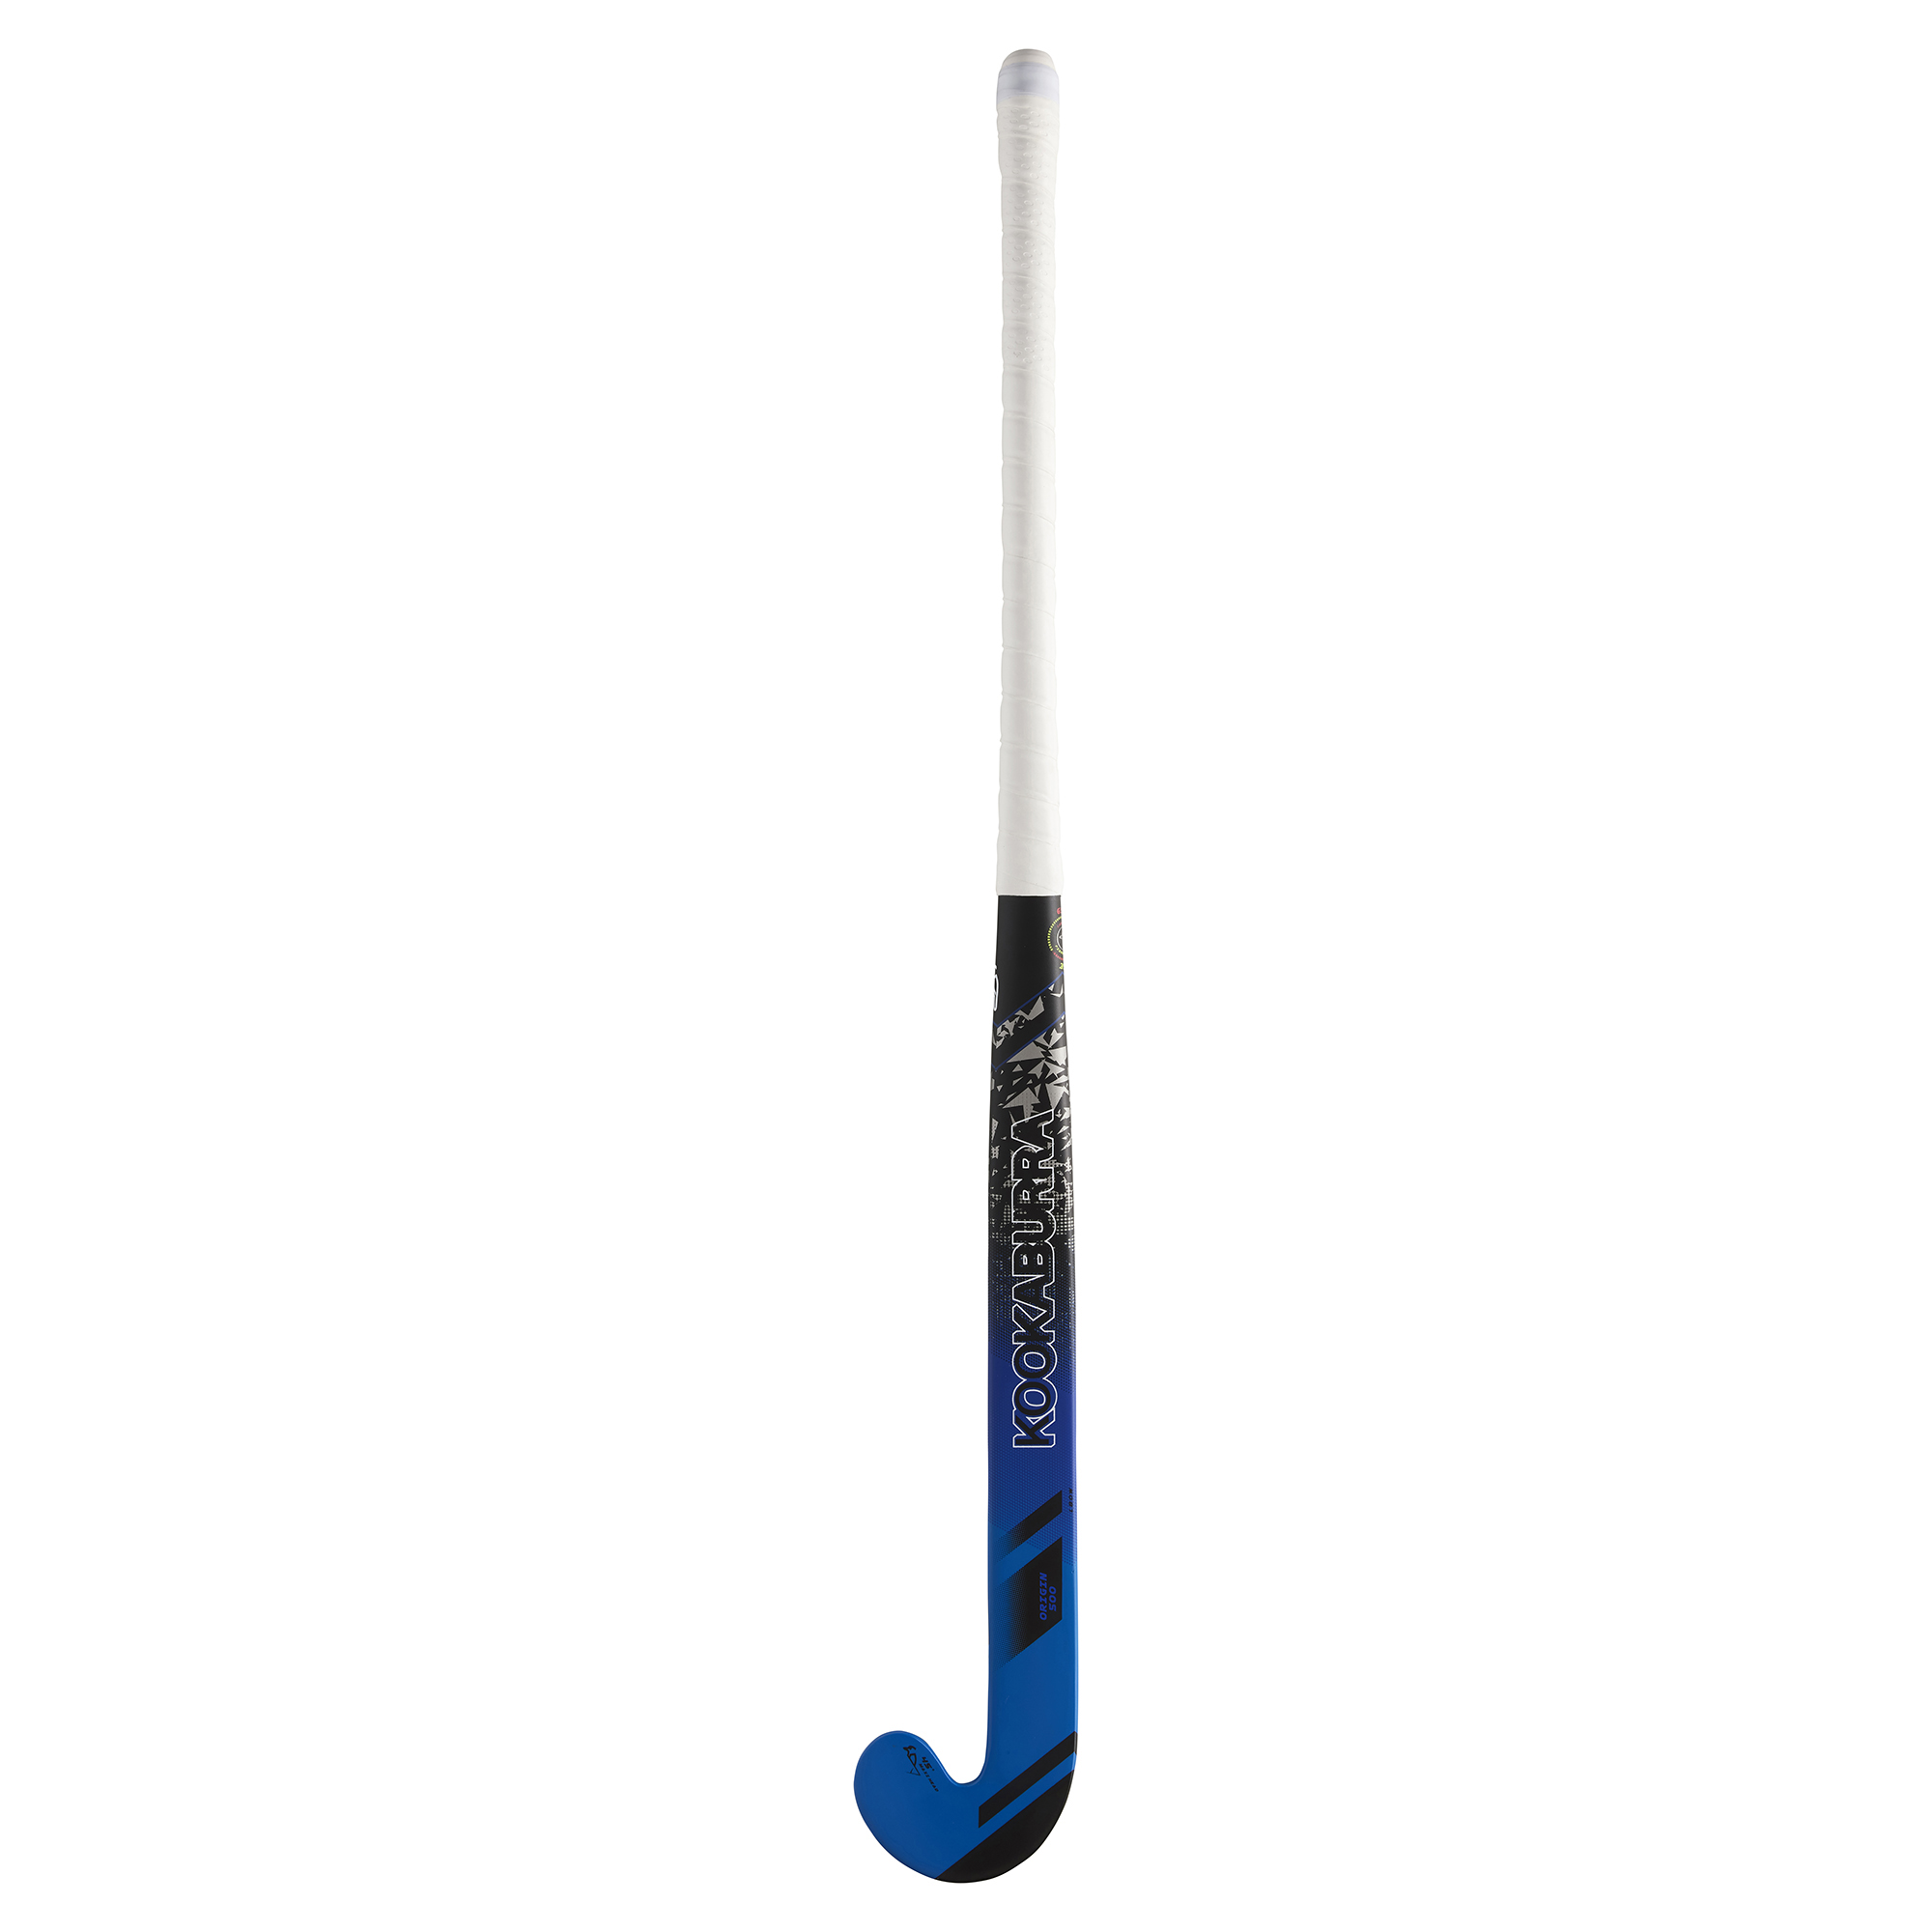 Kookaburra Origin 500 Mid-Bow Hockey Stick